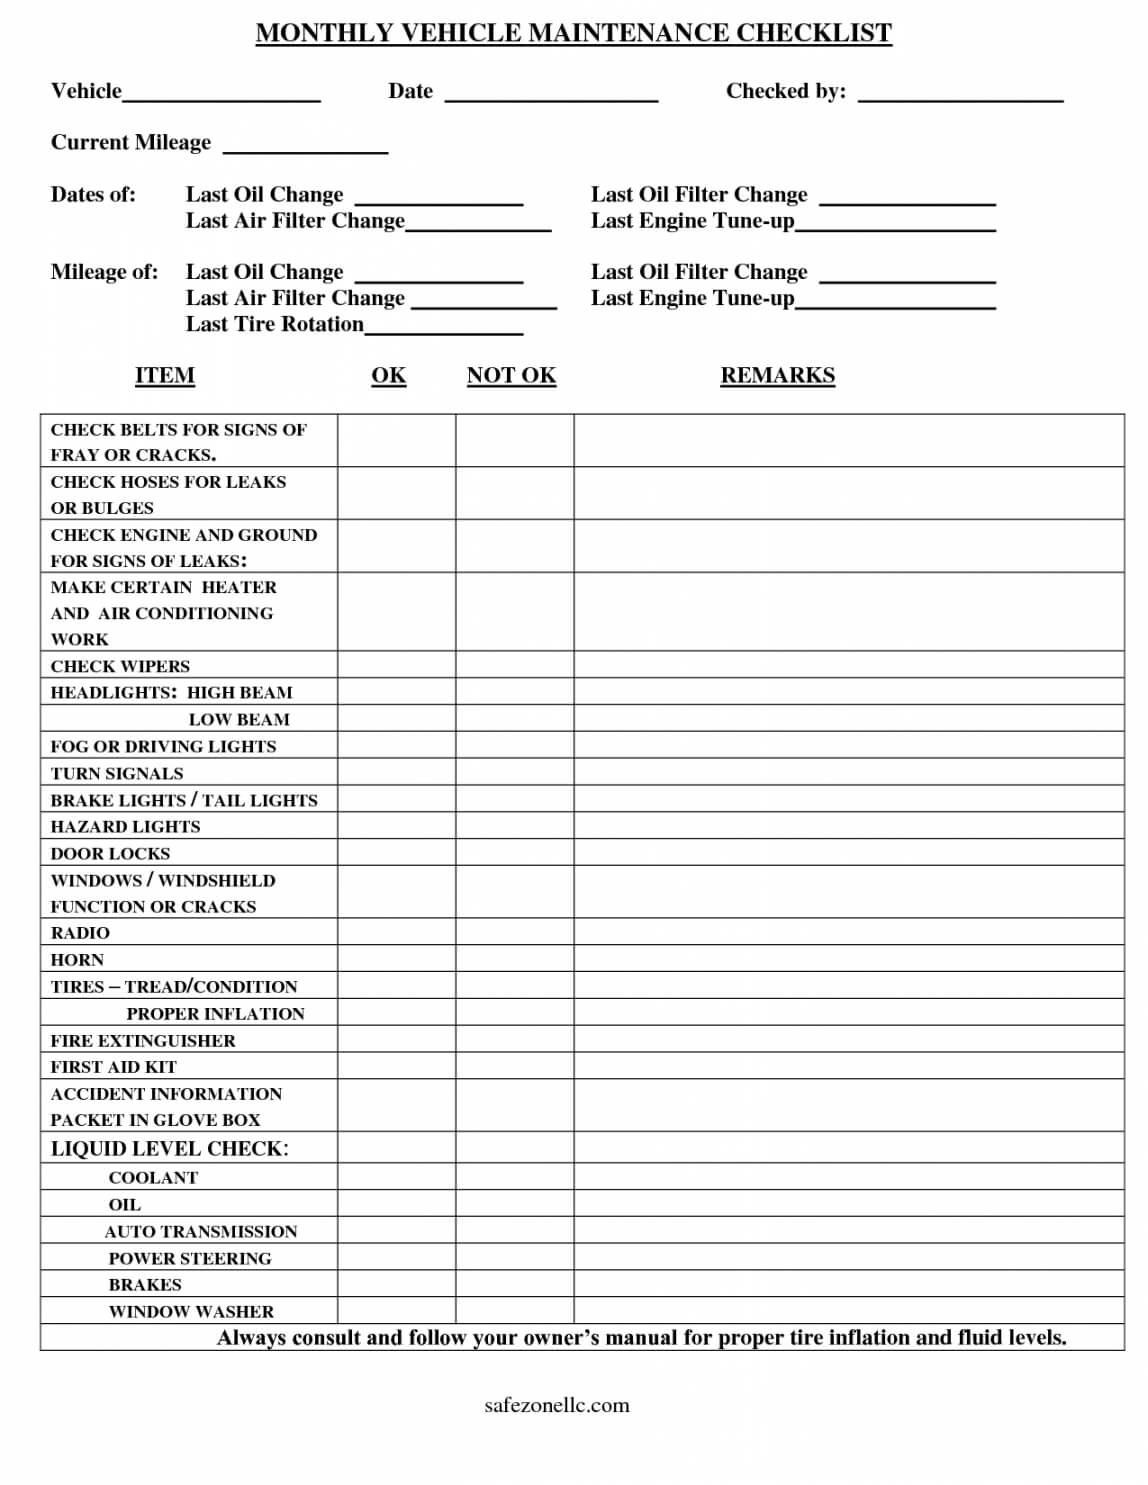 Monthly Inspection Checklist Template Regarding Vehicle Checklist Template Word